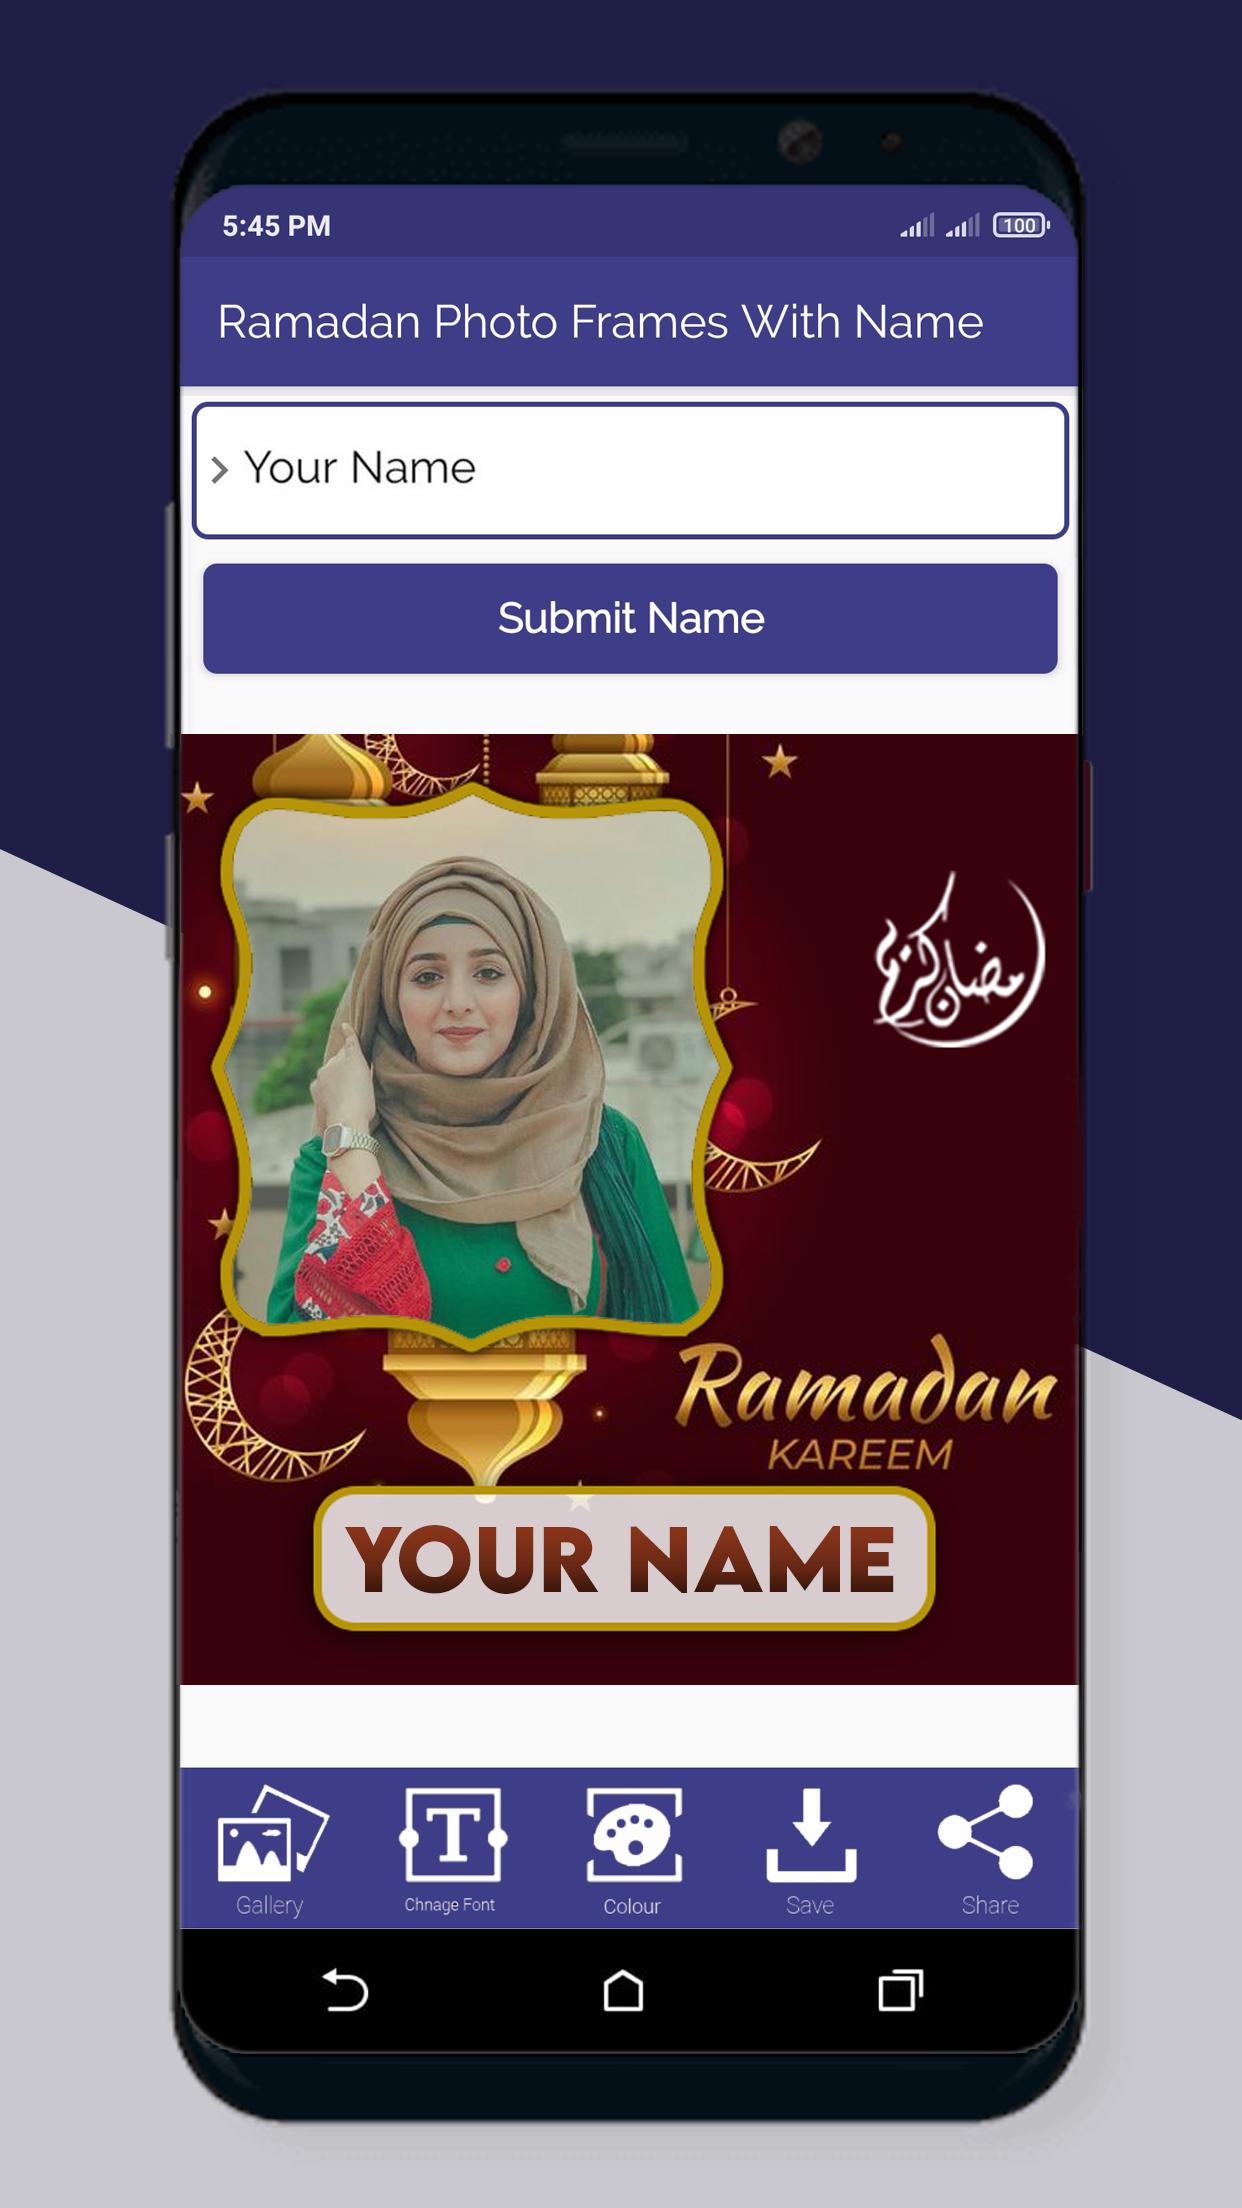 Ramadan 2021 Photo Frames With Name 3.0 Screenshot 3